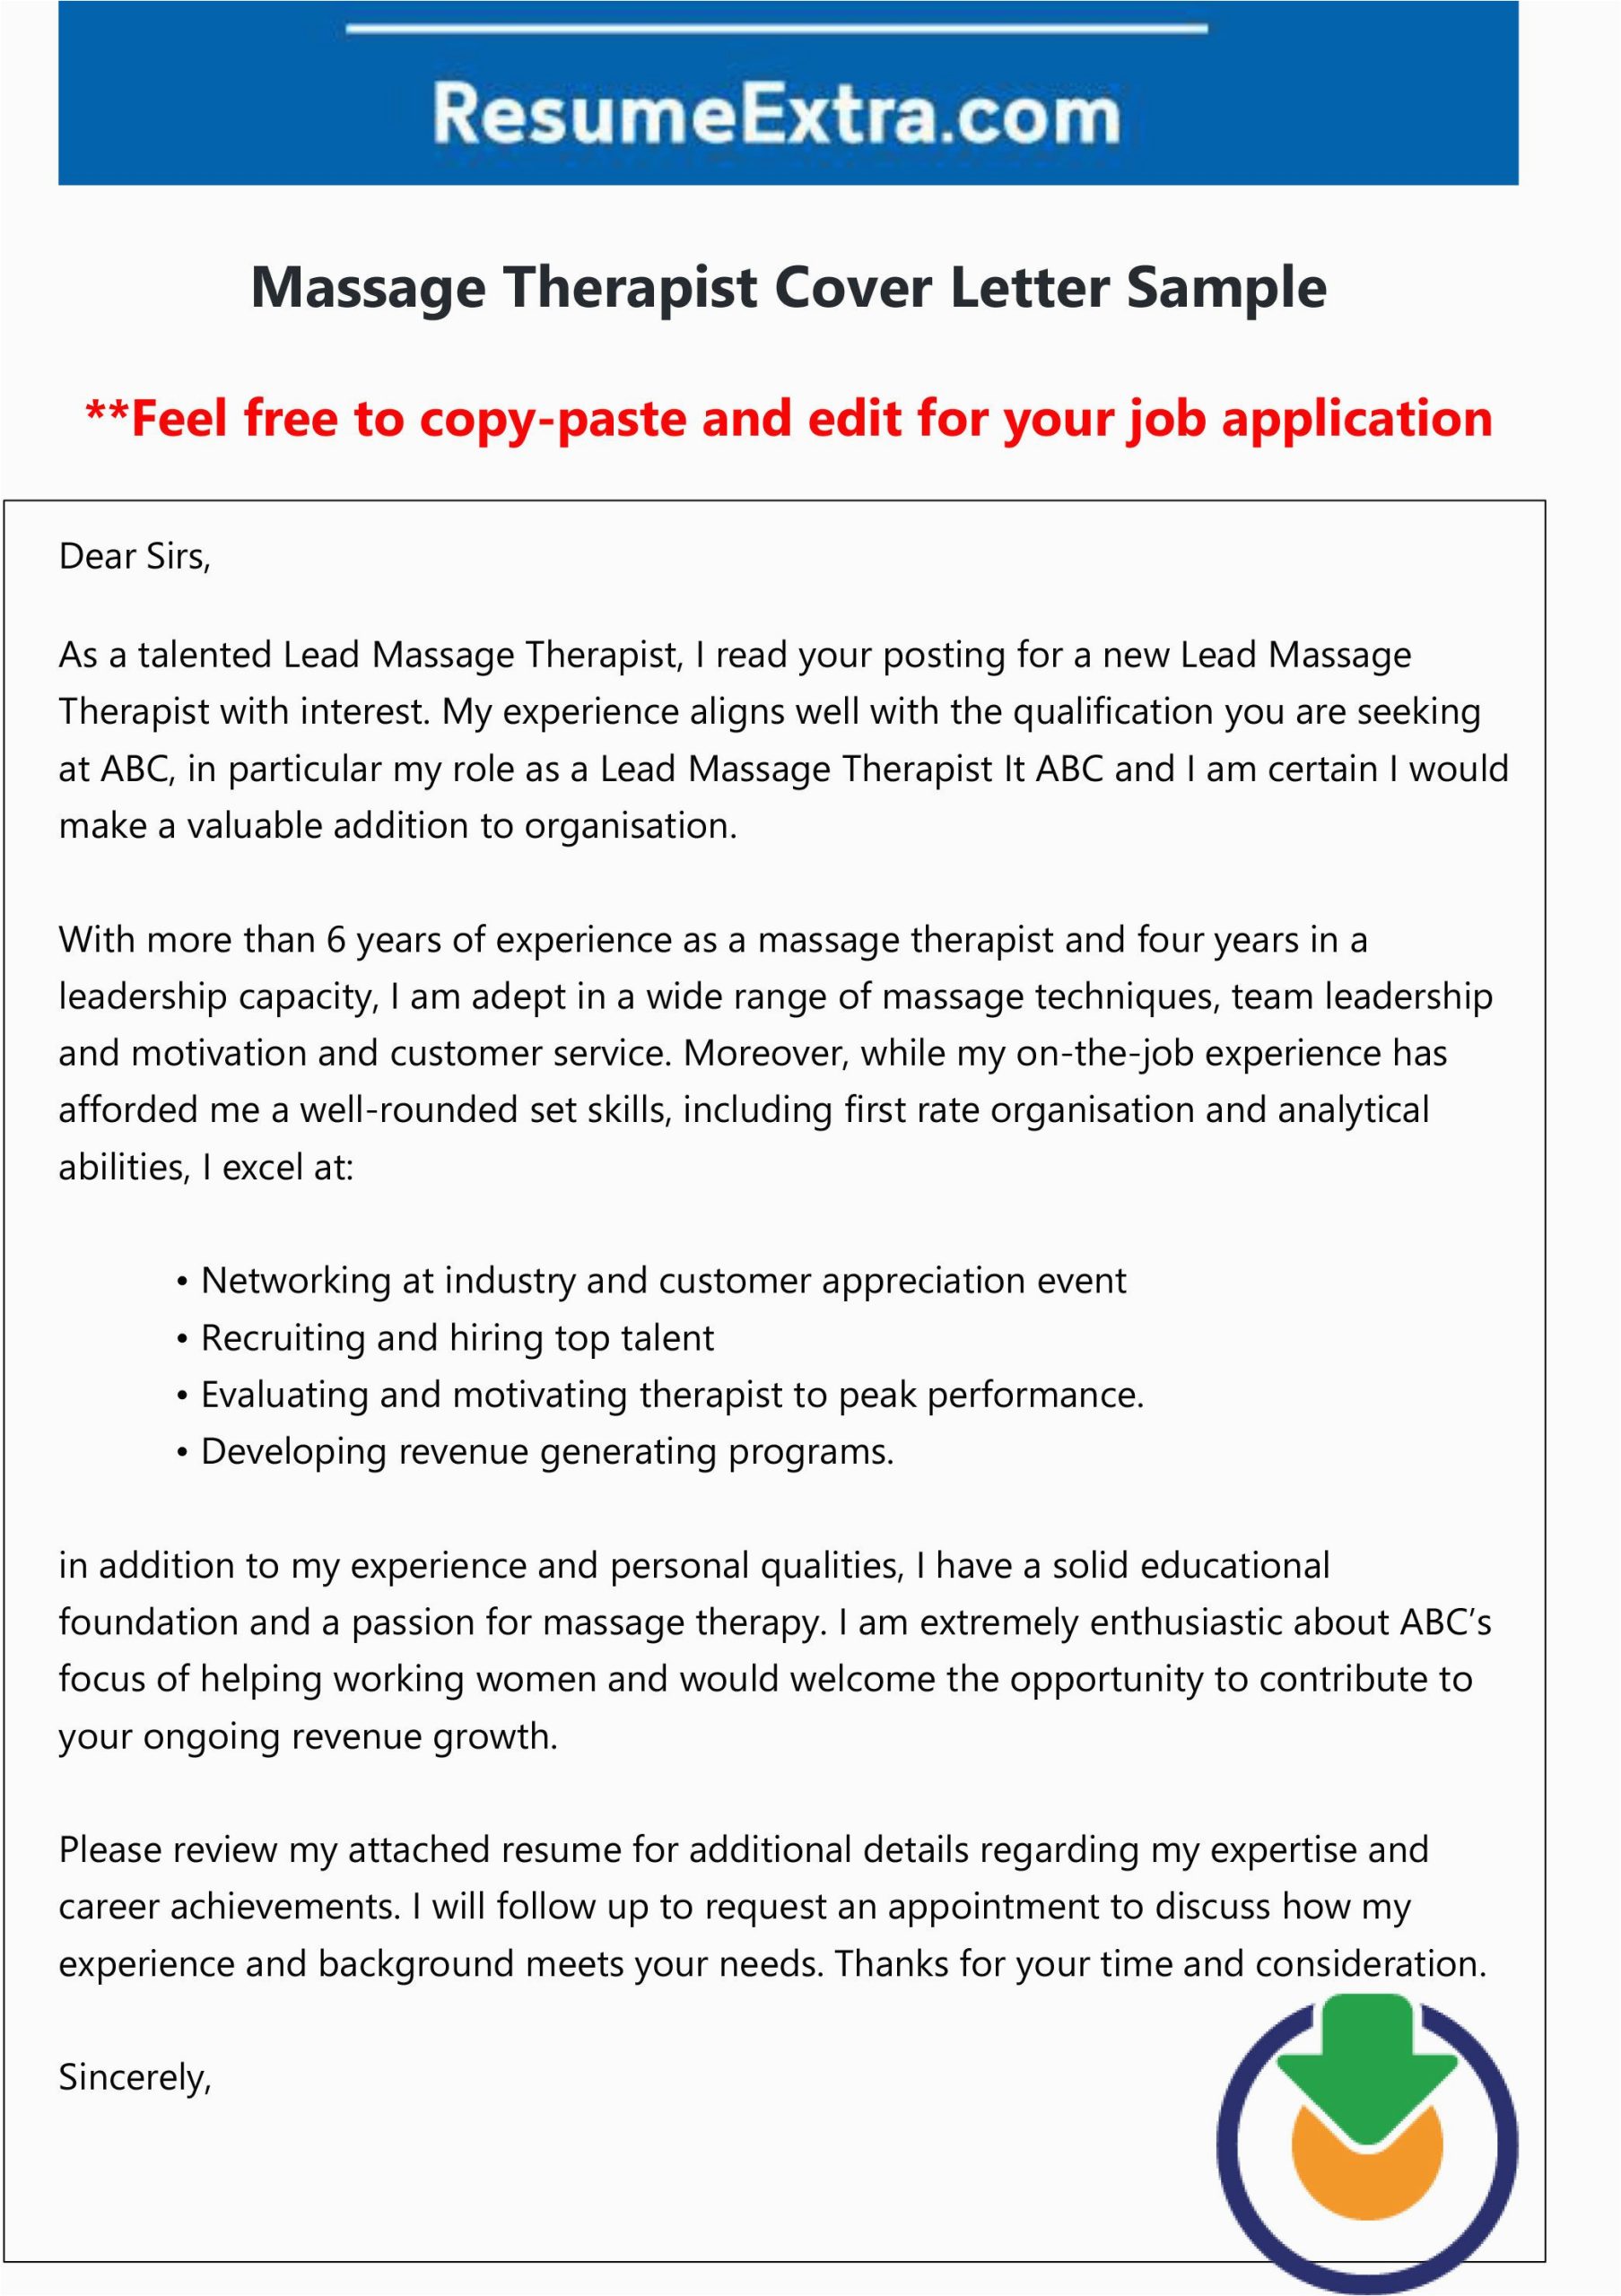 Massage therapist Resume Cover Letter Samples Free Massage therapist Cover Letter